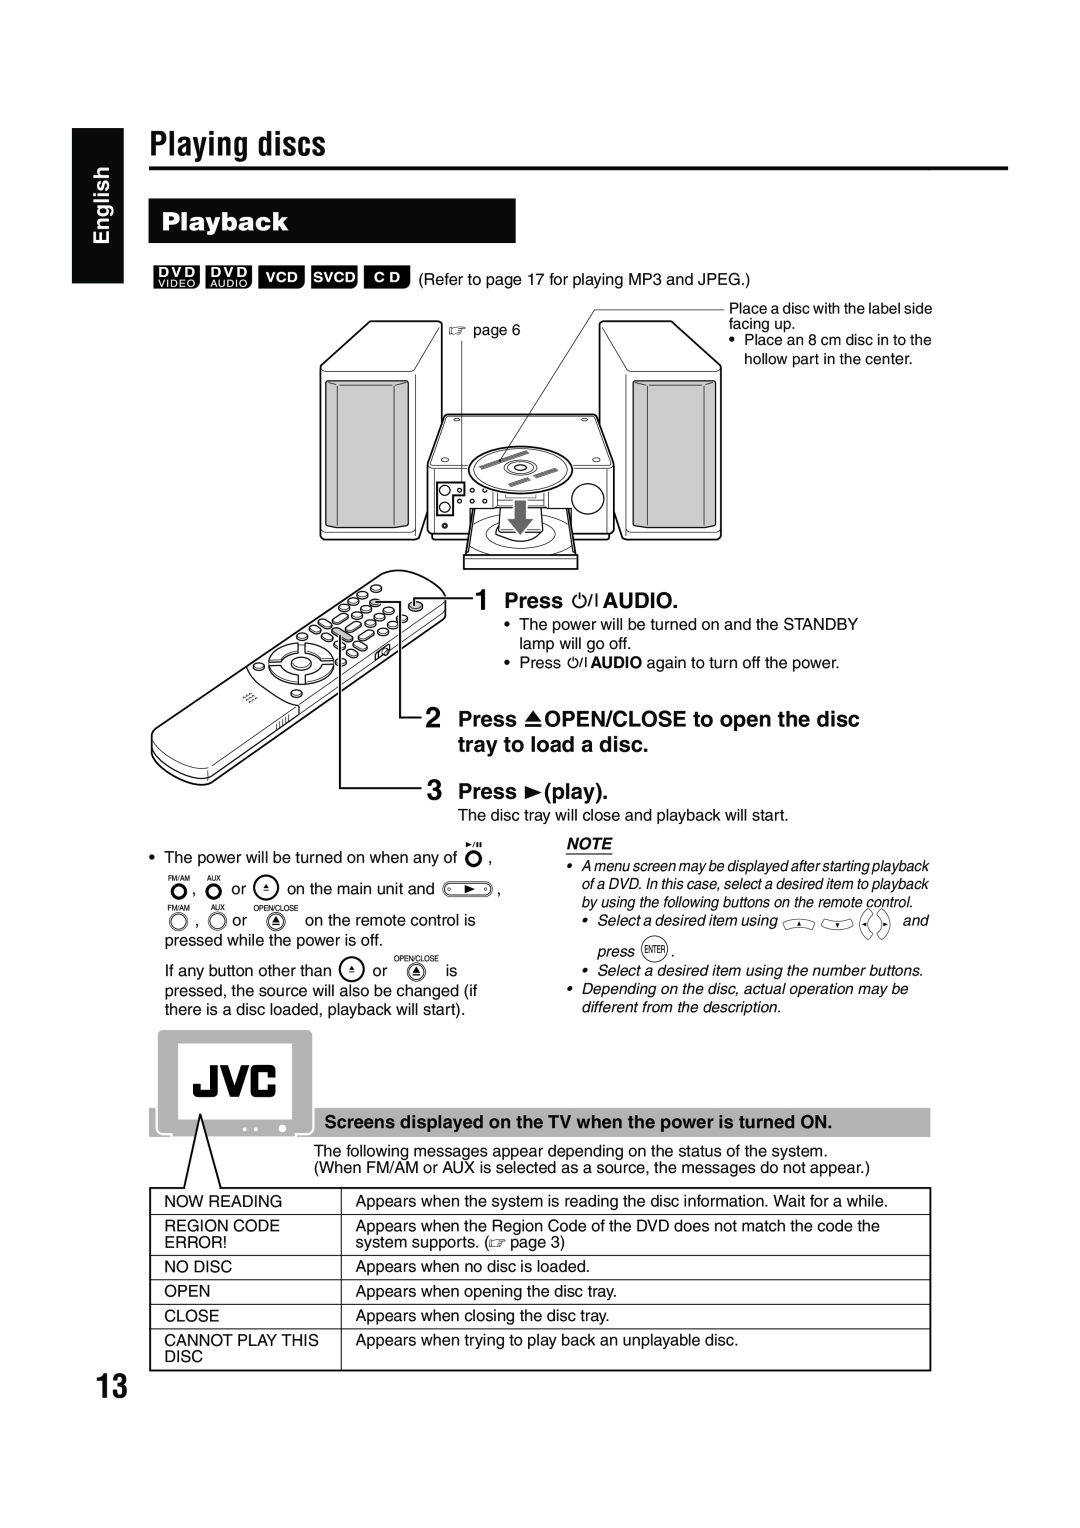 JVC EX-A5 manual Playing discs, Playback, Press FAUDIO, Press 3play, English 